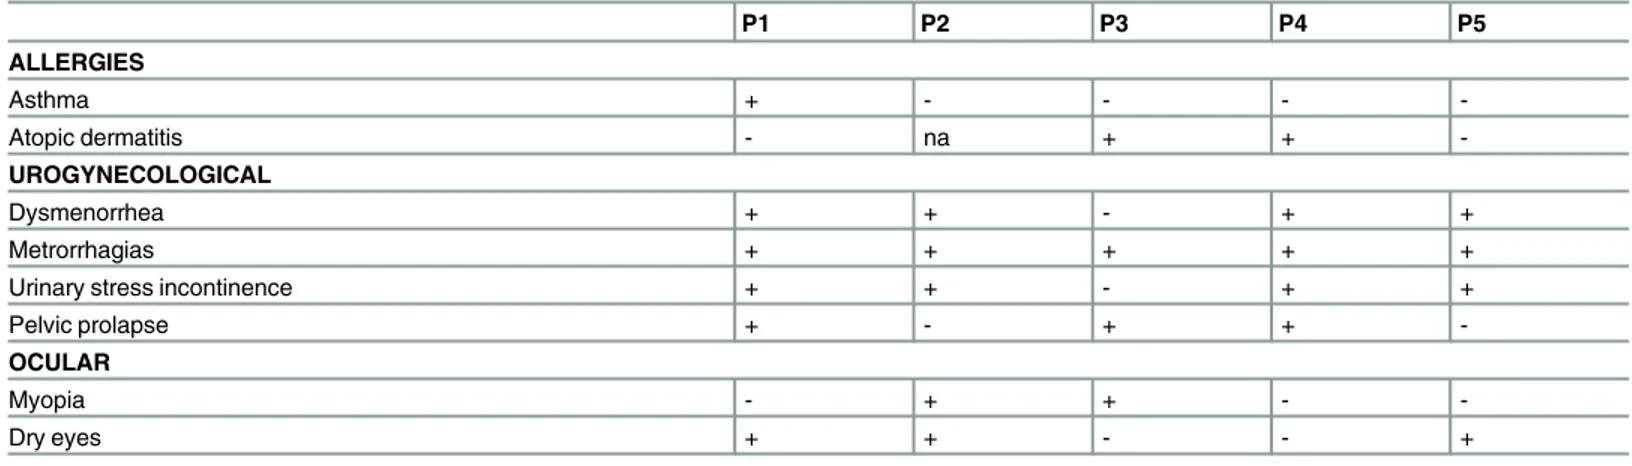 Table 1. (Continued) P1 P2 P3 P4 P5 ALLERGIES Asthma + - - -  -Atopic dermatitis - na + +  -UROGYNECOLOGICAL Dysmenorrhea + + - + + Metrorrhagias + + + + +